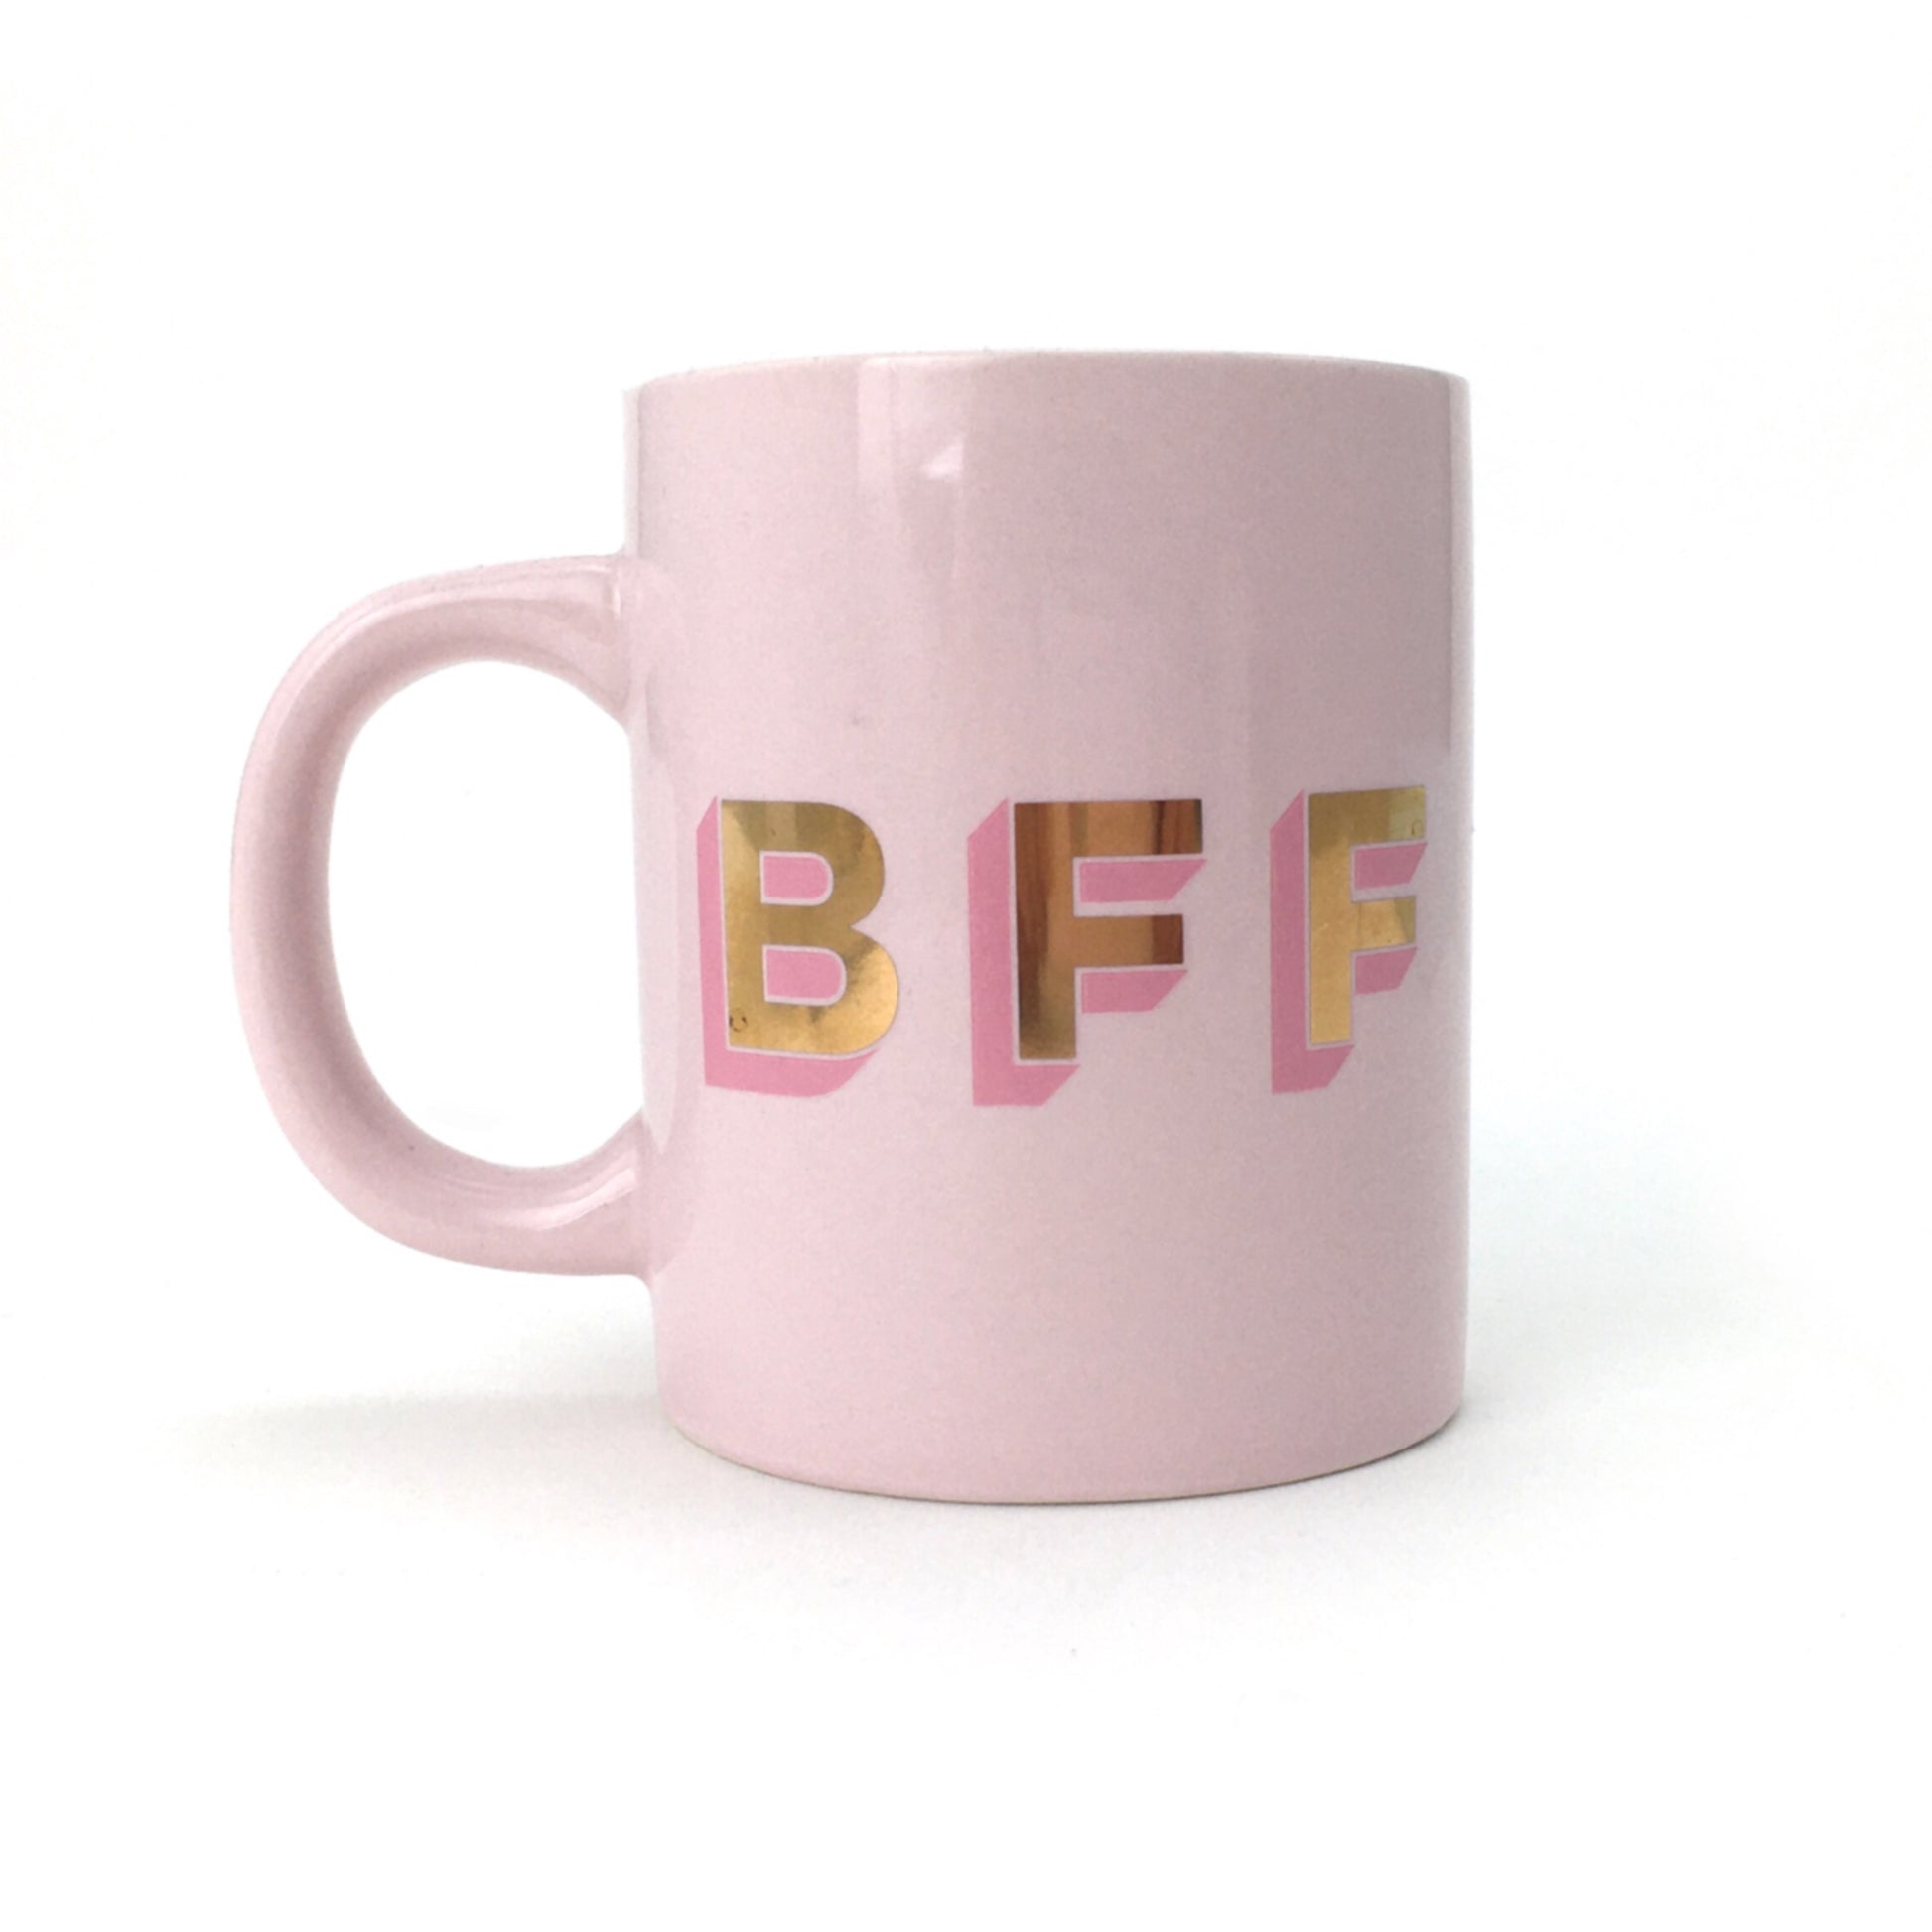 “BFF" Ceramic Mug by ban.do - by ban.do - K. A. Artist Shop